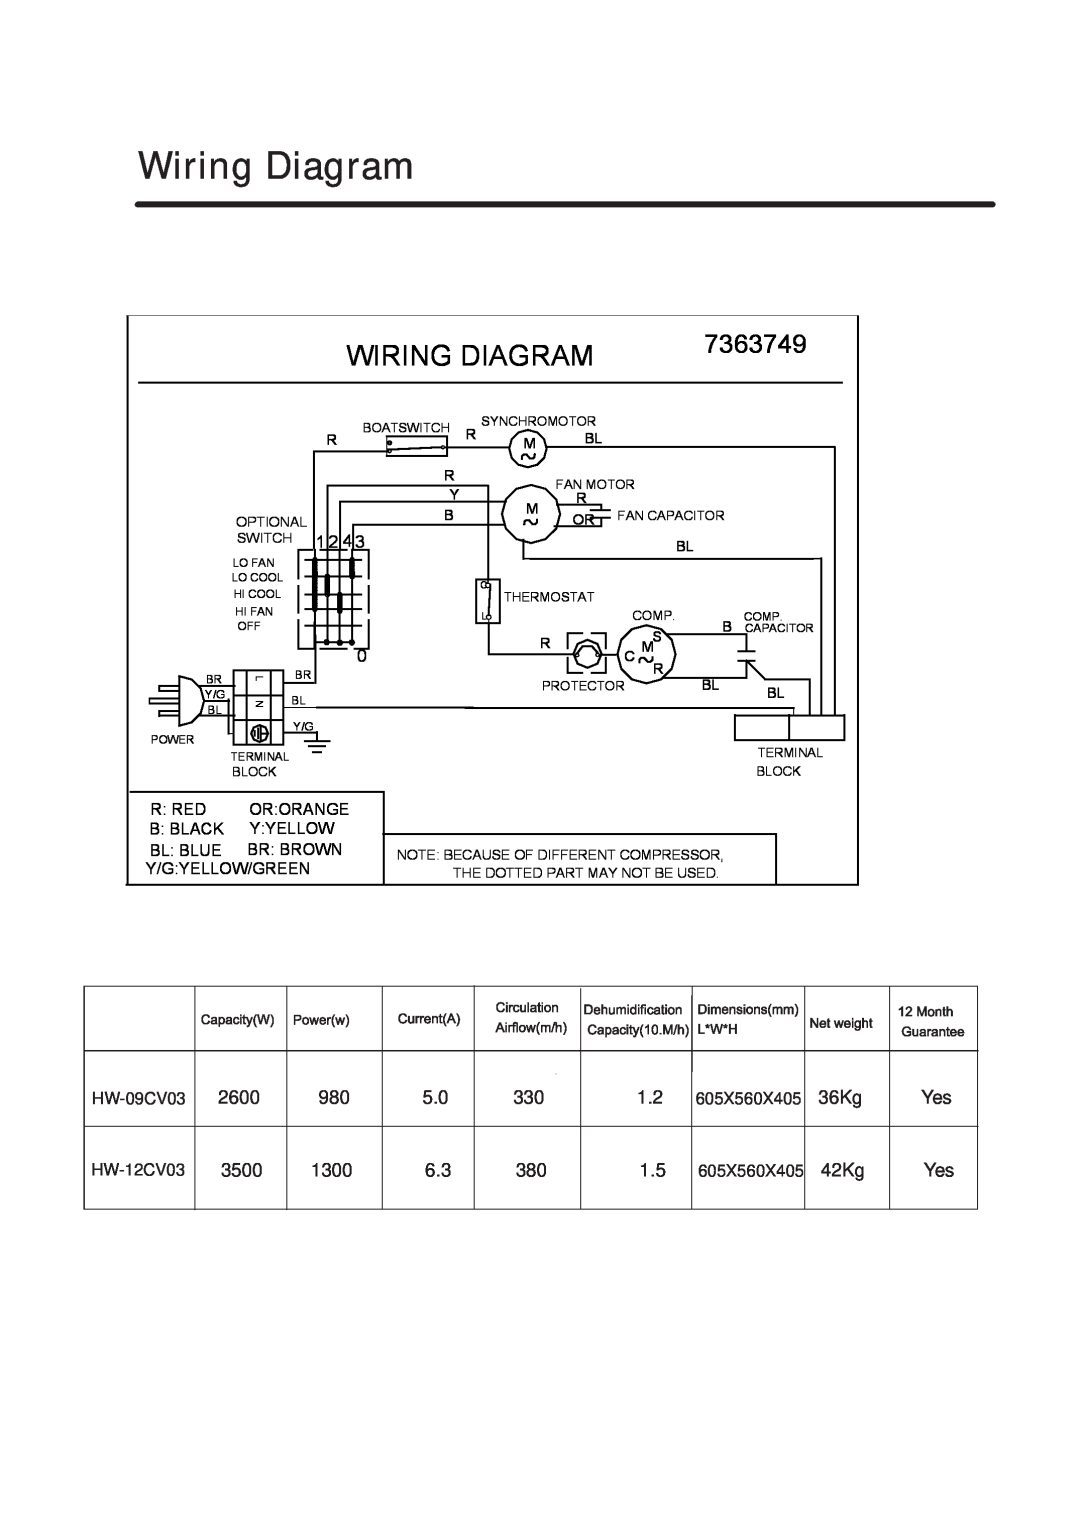 Haier HW-12CV03, HW-09CV03 manual Wiring Diagram, 7363749 